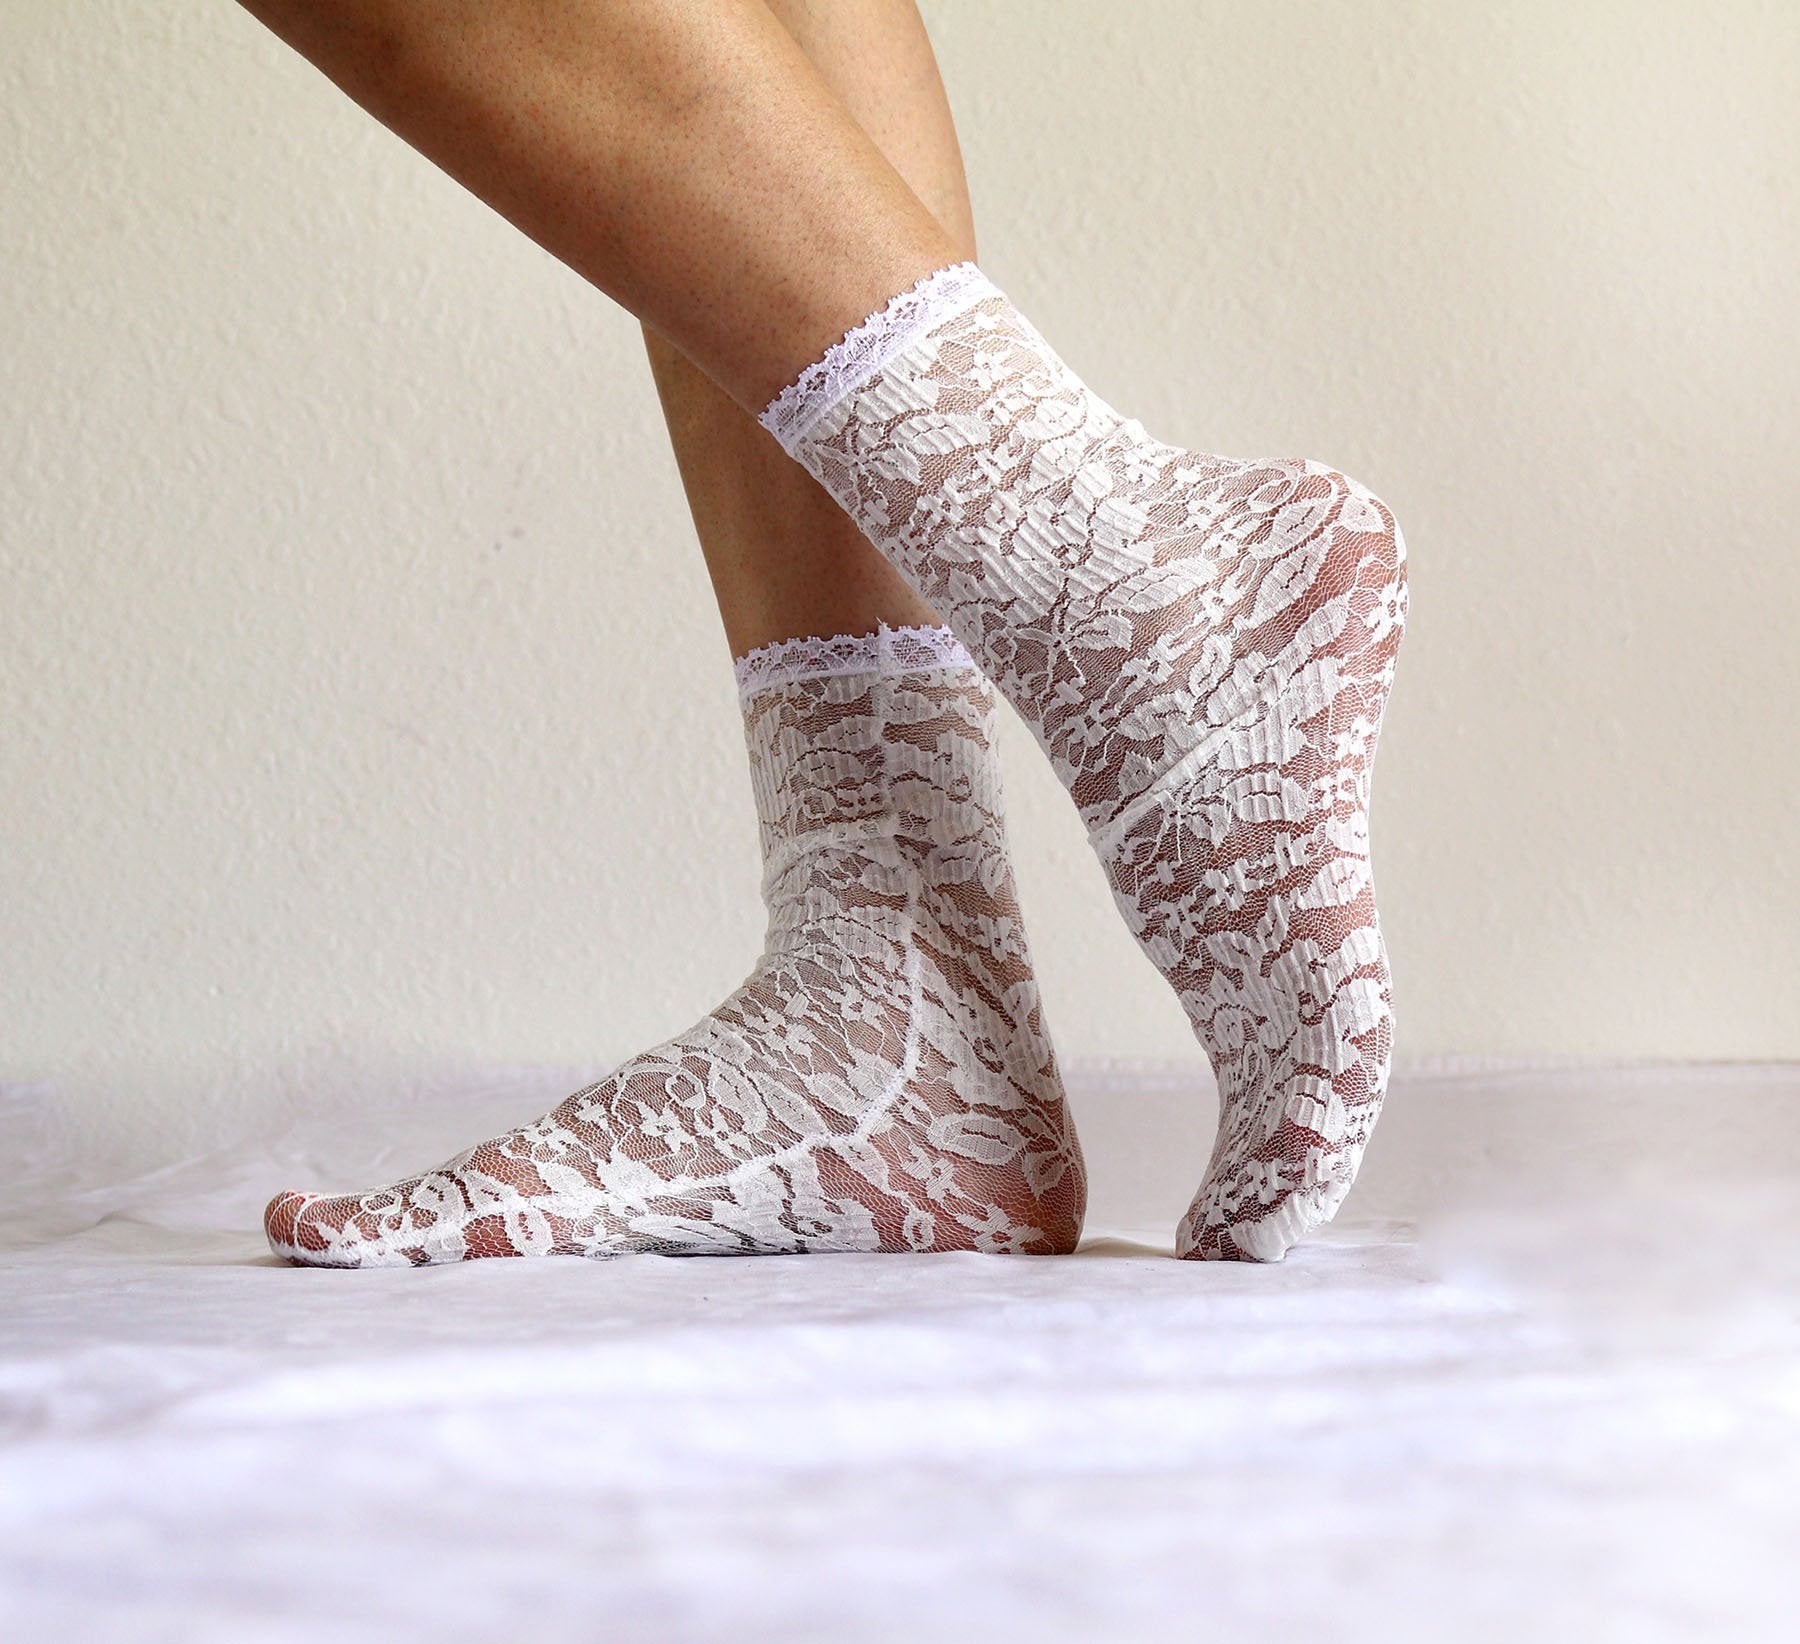 Ivory Lace Women's Socks. Handmade Lacy Socks. Bridal gift.